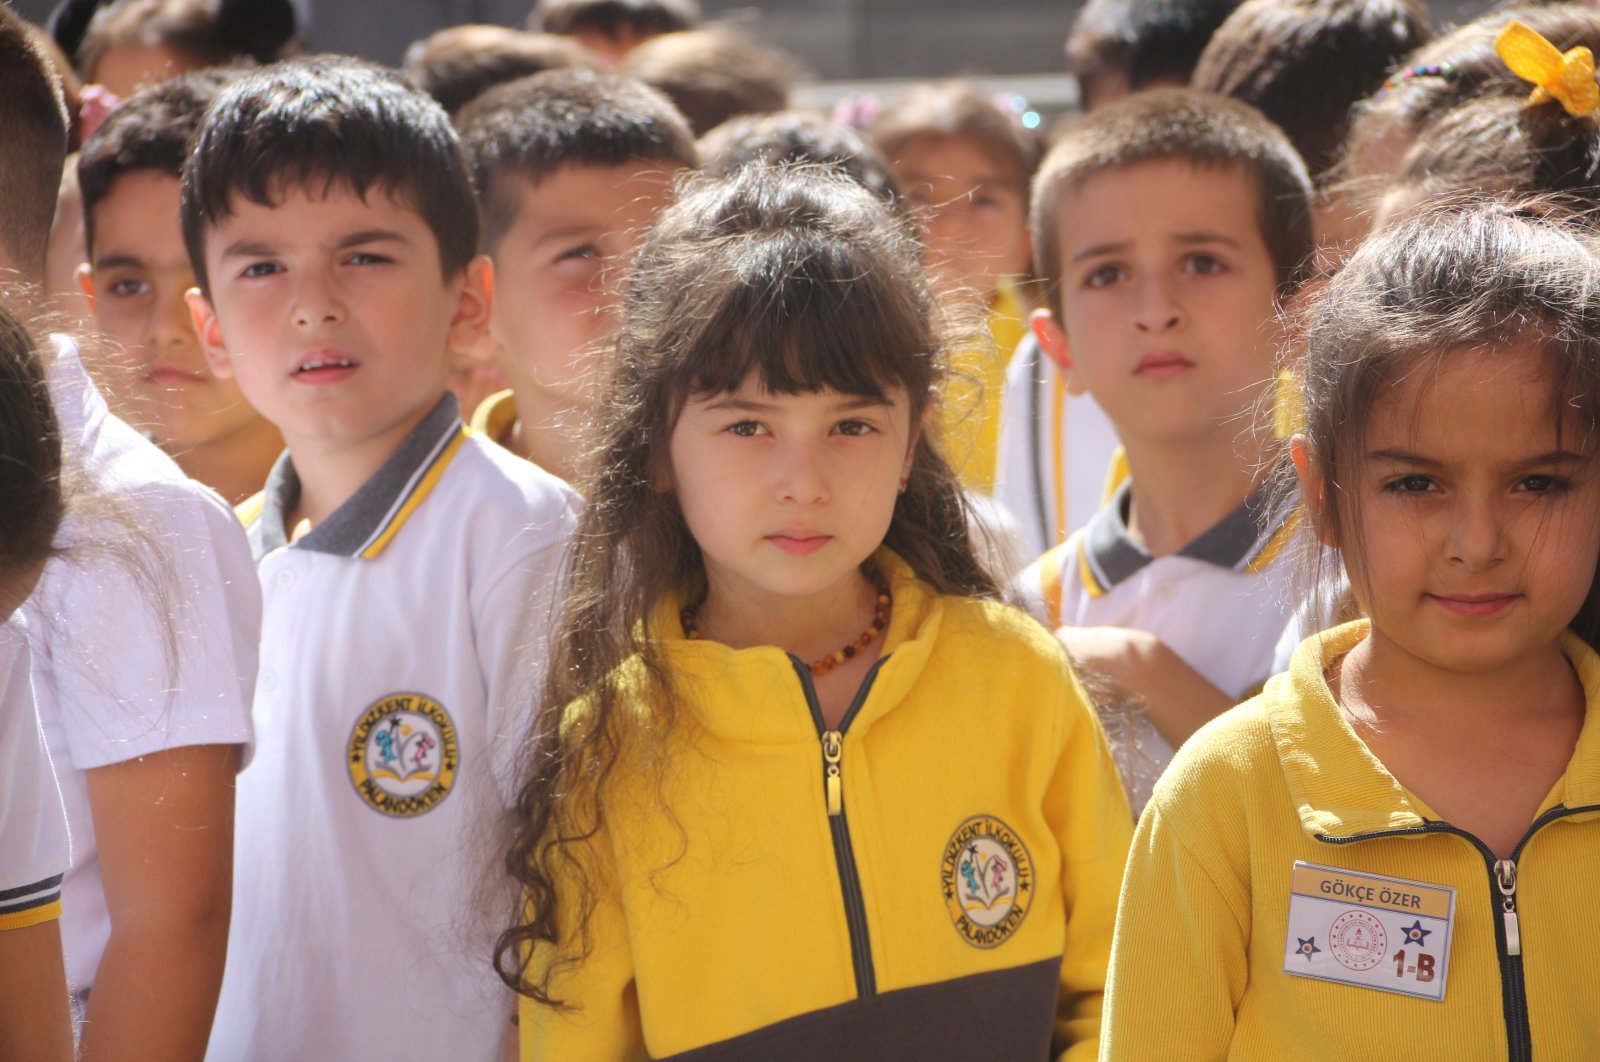 Pakar Turki mendesak kesabaran untuk membantu anak-anak sekolah yang stres